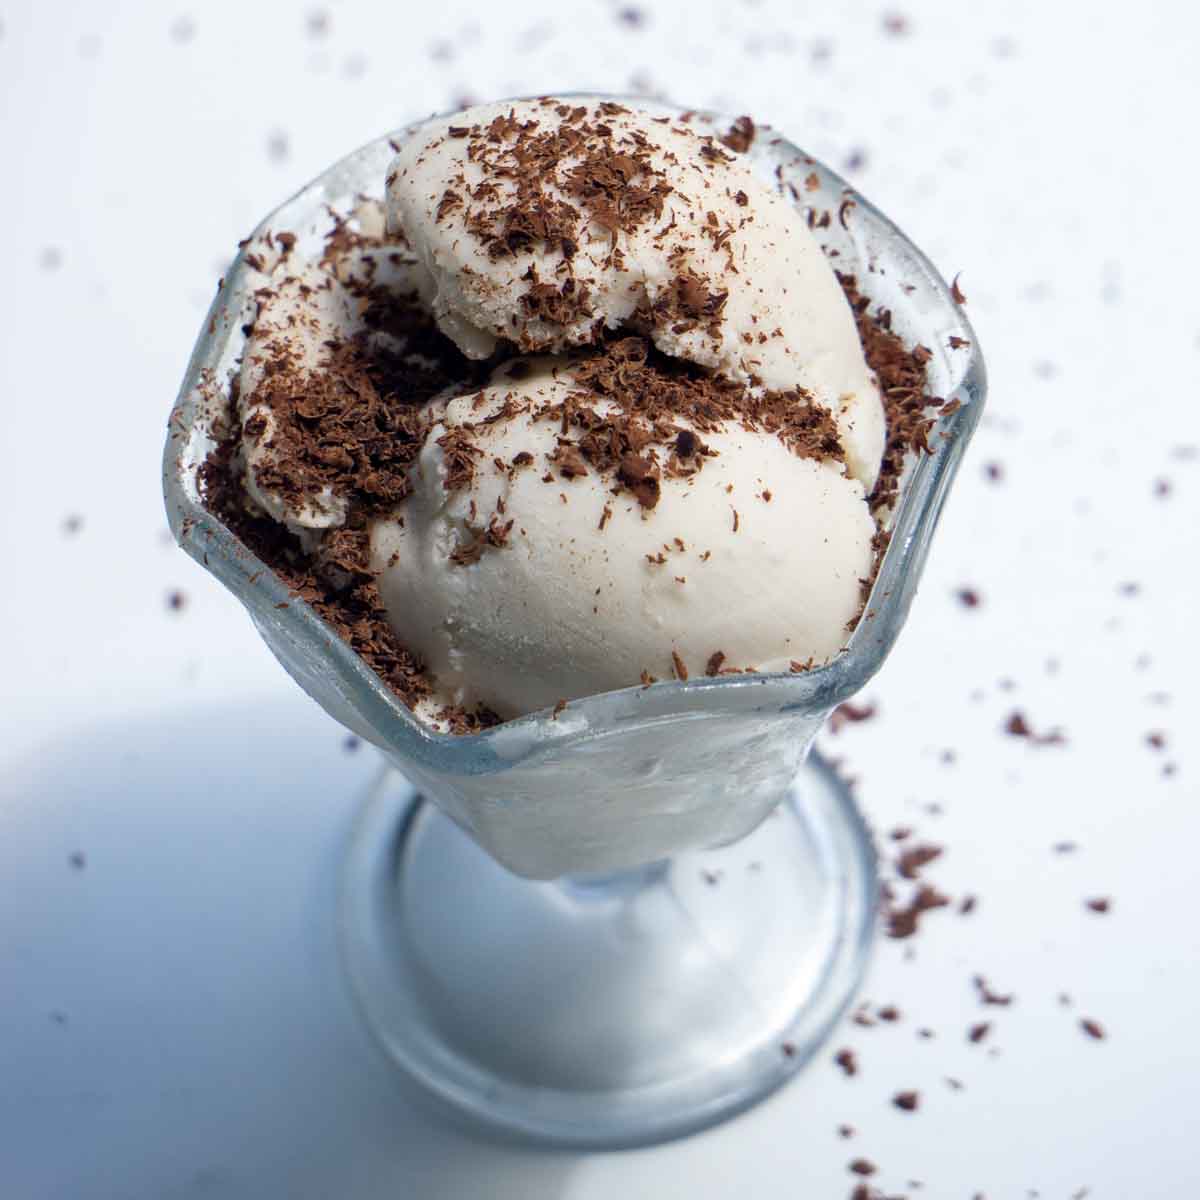 coconut milk ice cream with chocolate shavings